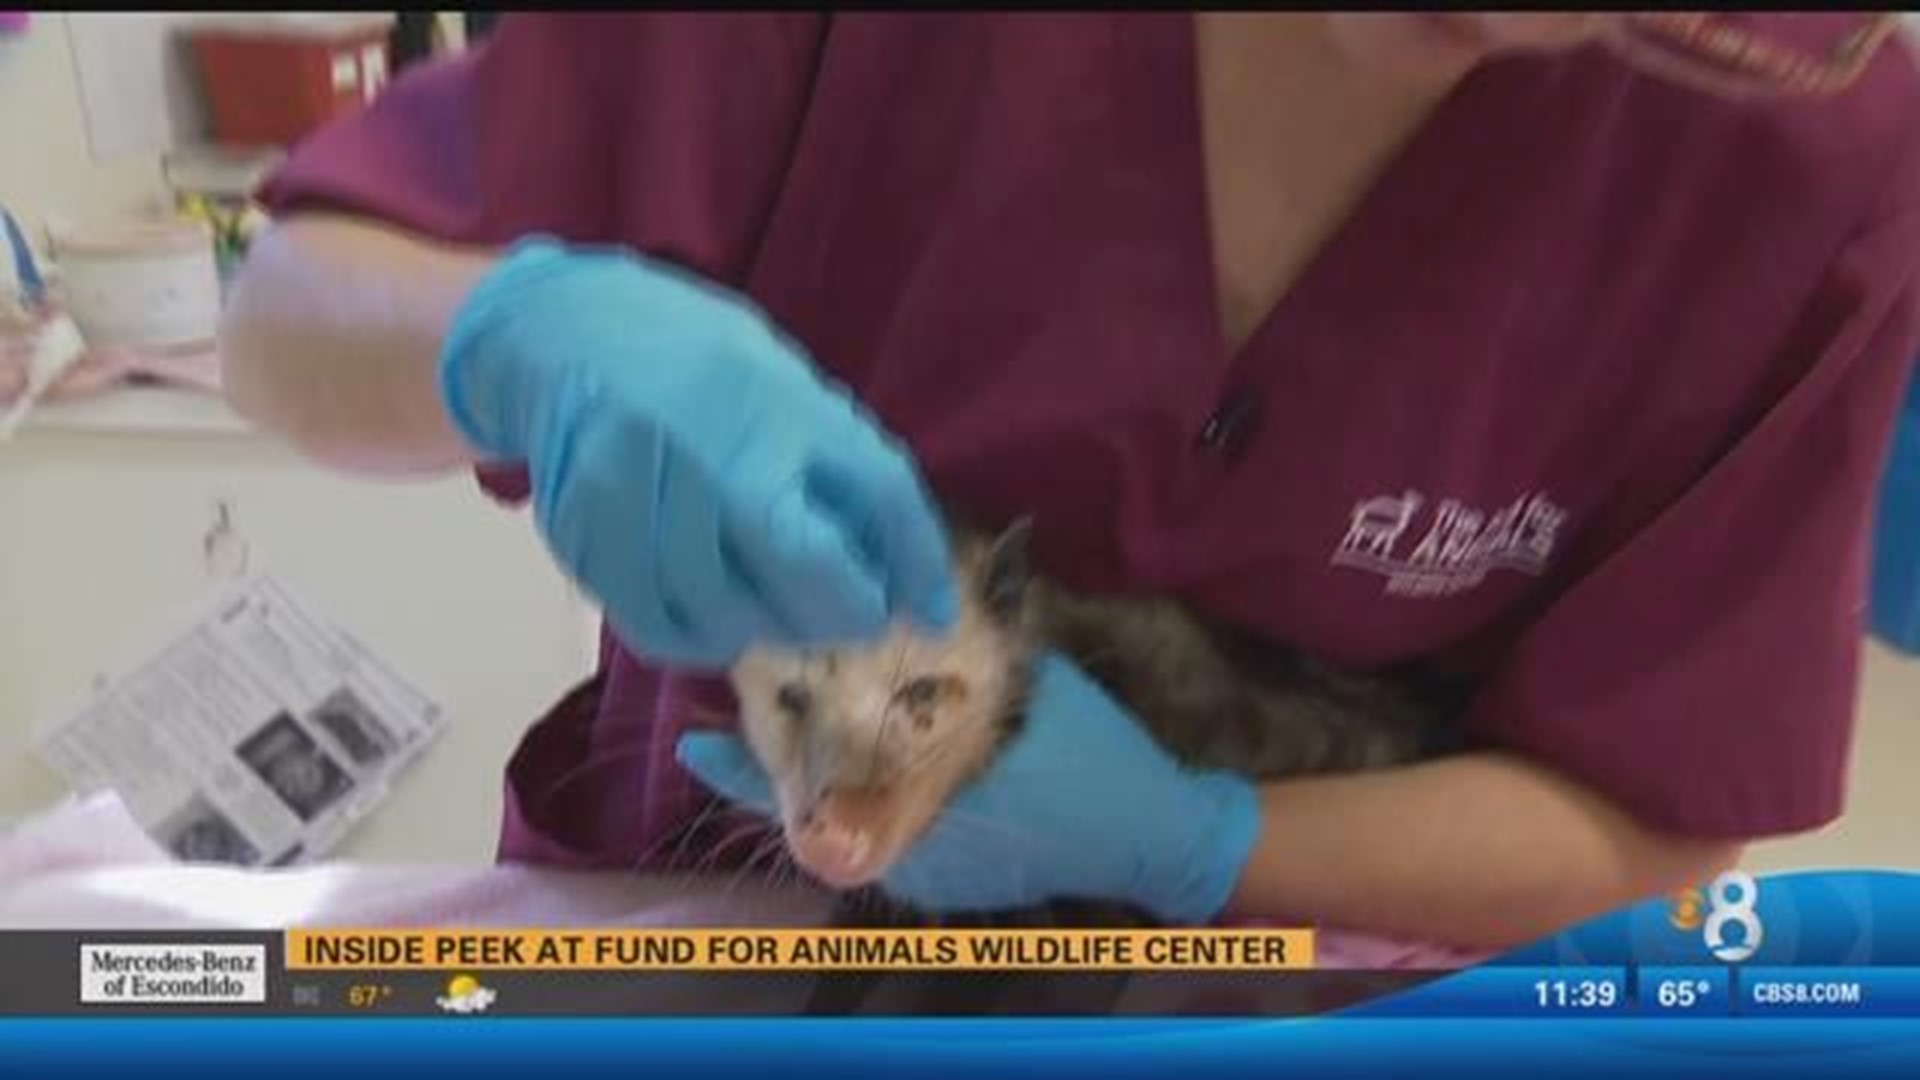 Inside peek at fund for animals wildlife center 